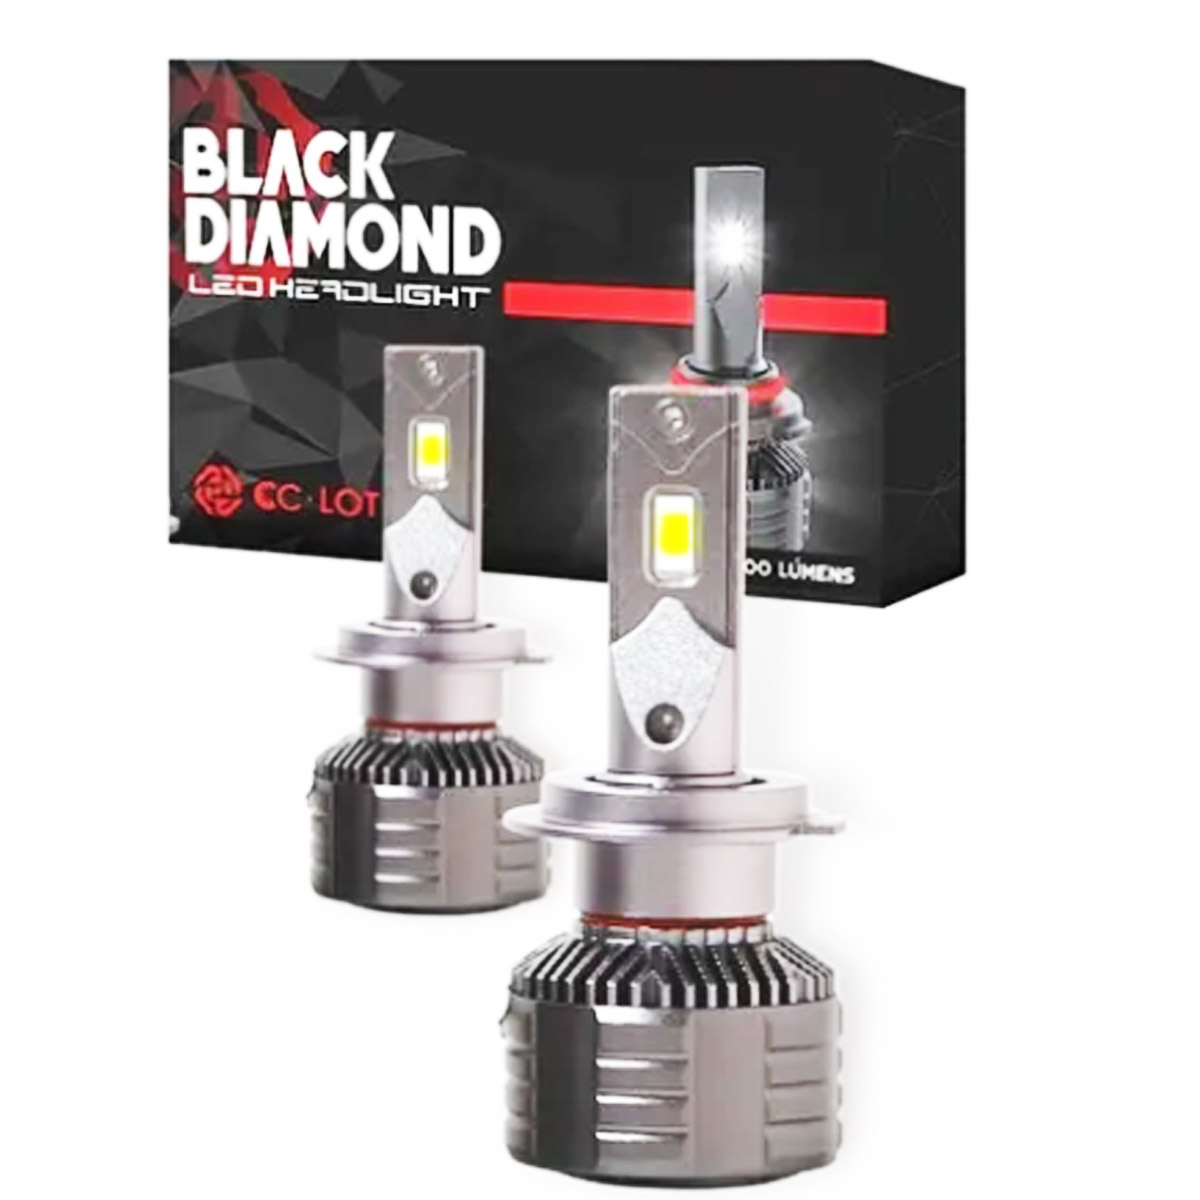 Par de Lâmpada Headlight Led CC-LOT Black Diamond F13 9012 9000 Lúmens JR8